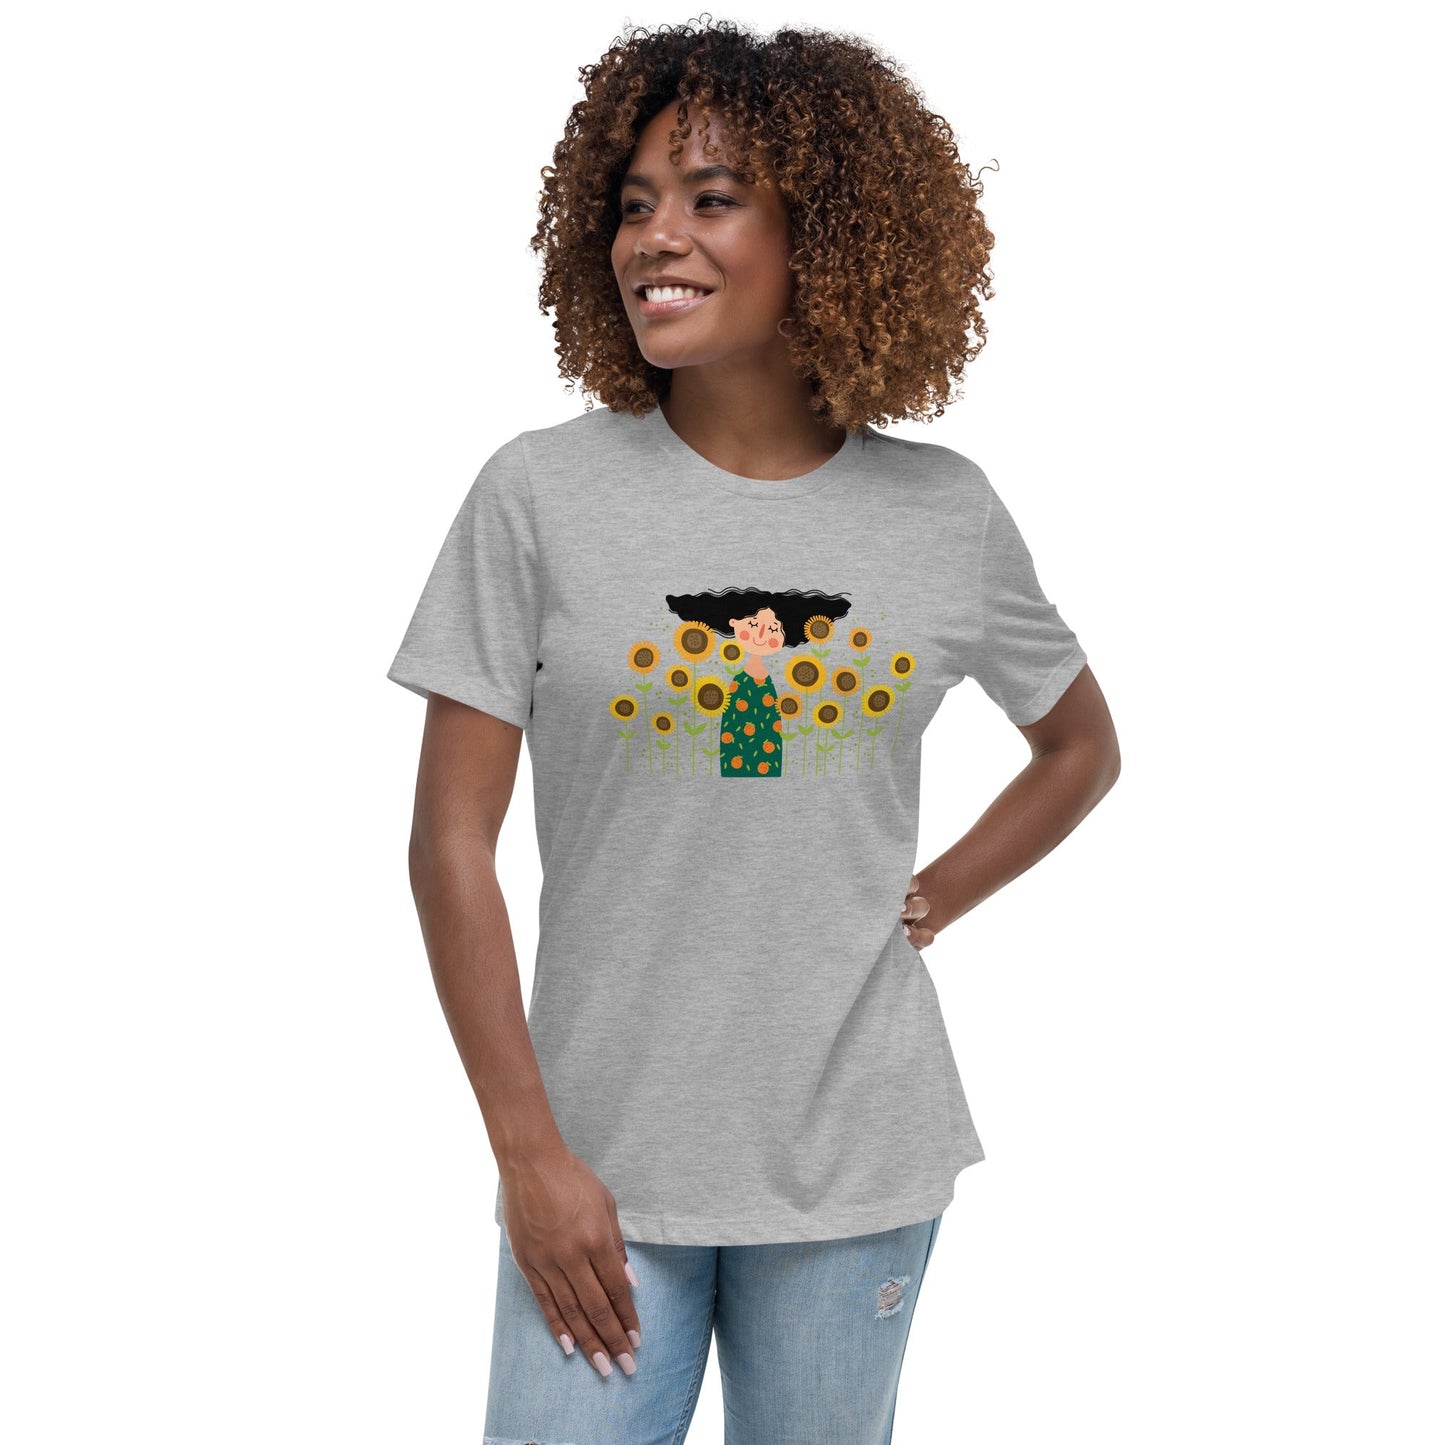 WHOLE LOTTA LOVE Women's T-Shirt - Bonotee